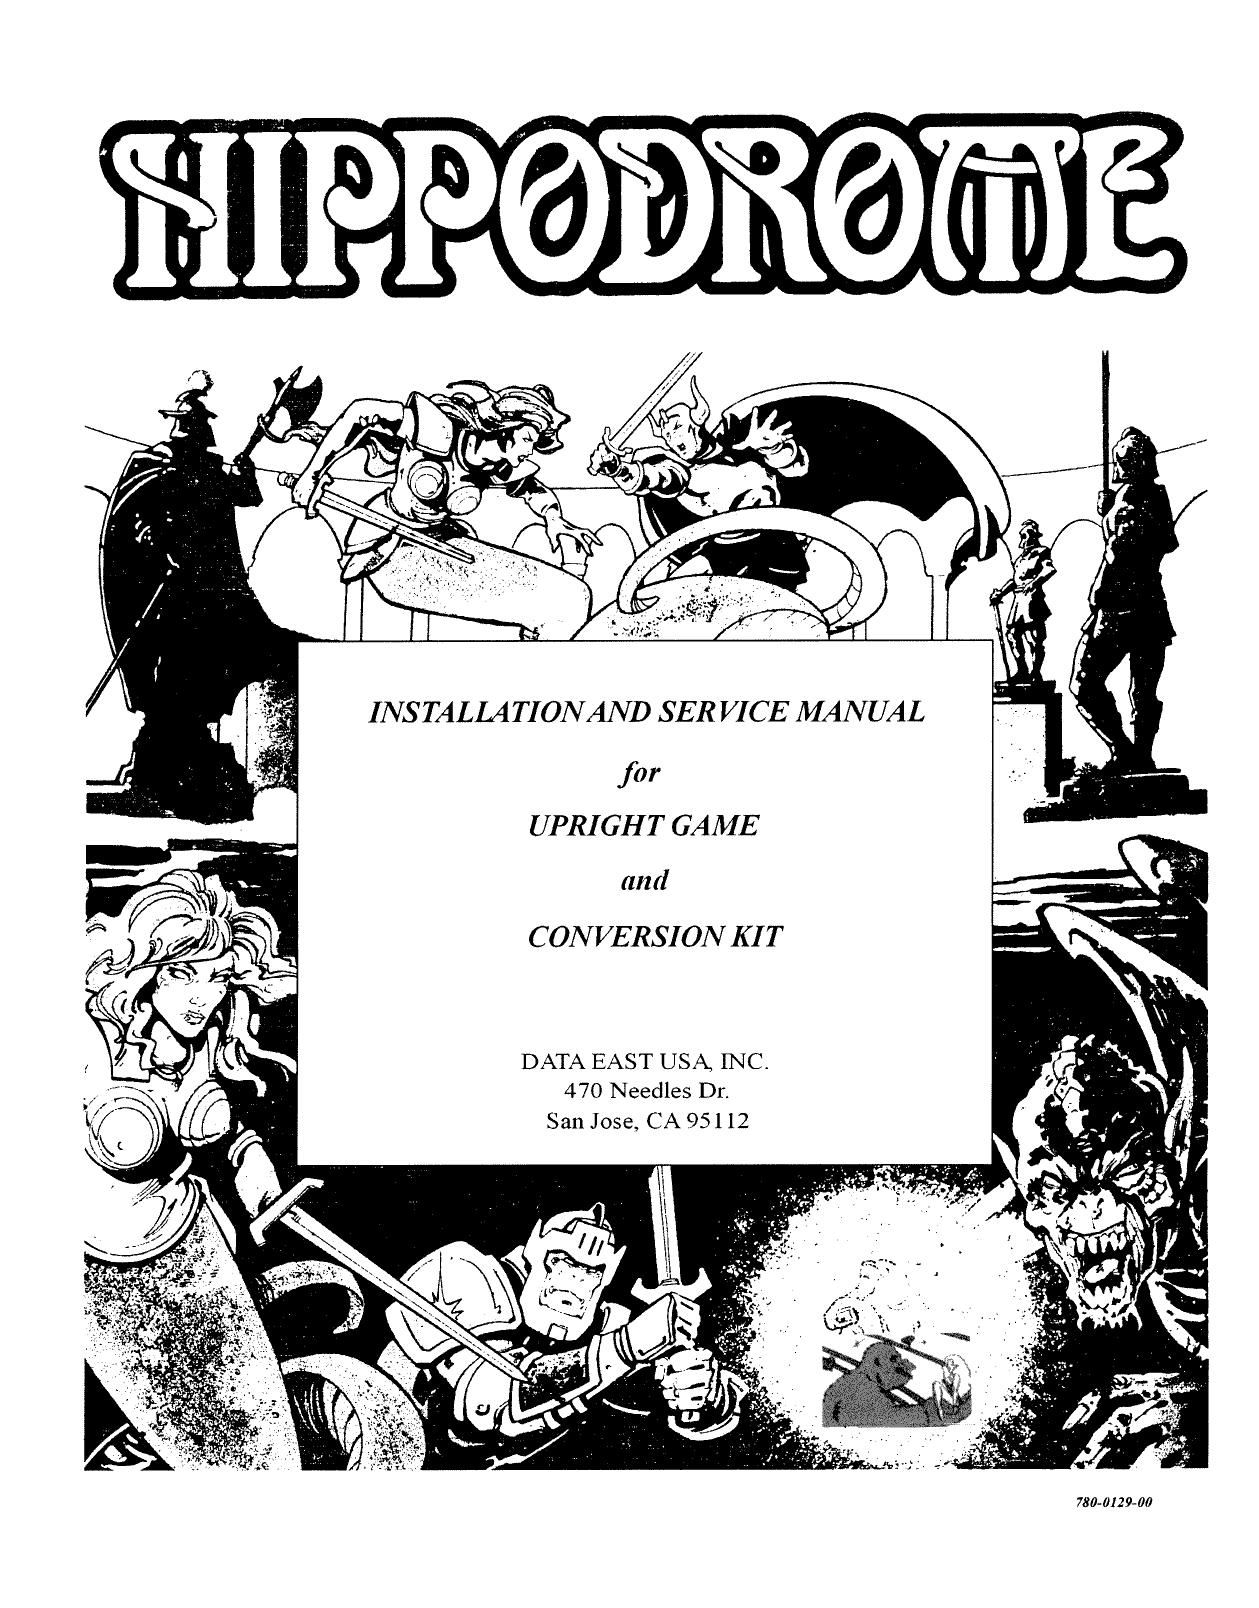 Hippodrome Manual